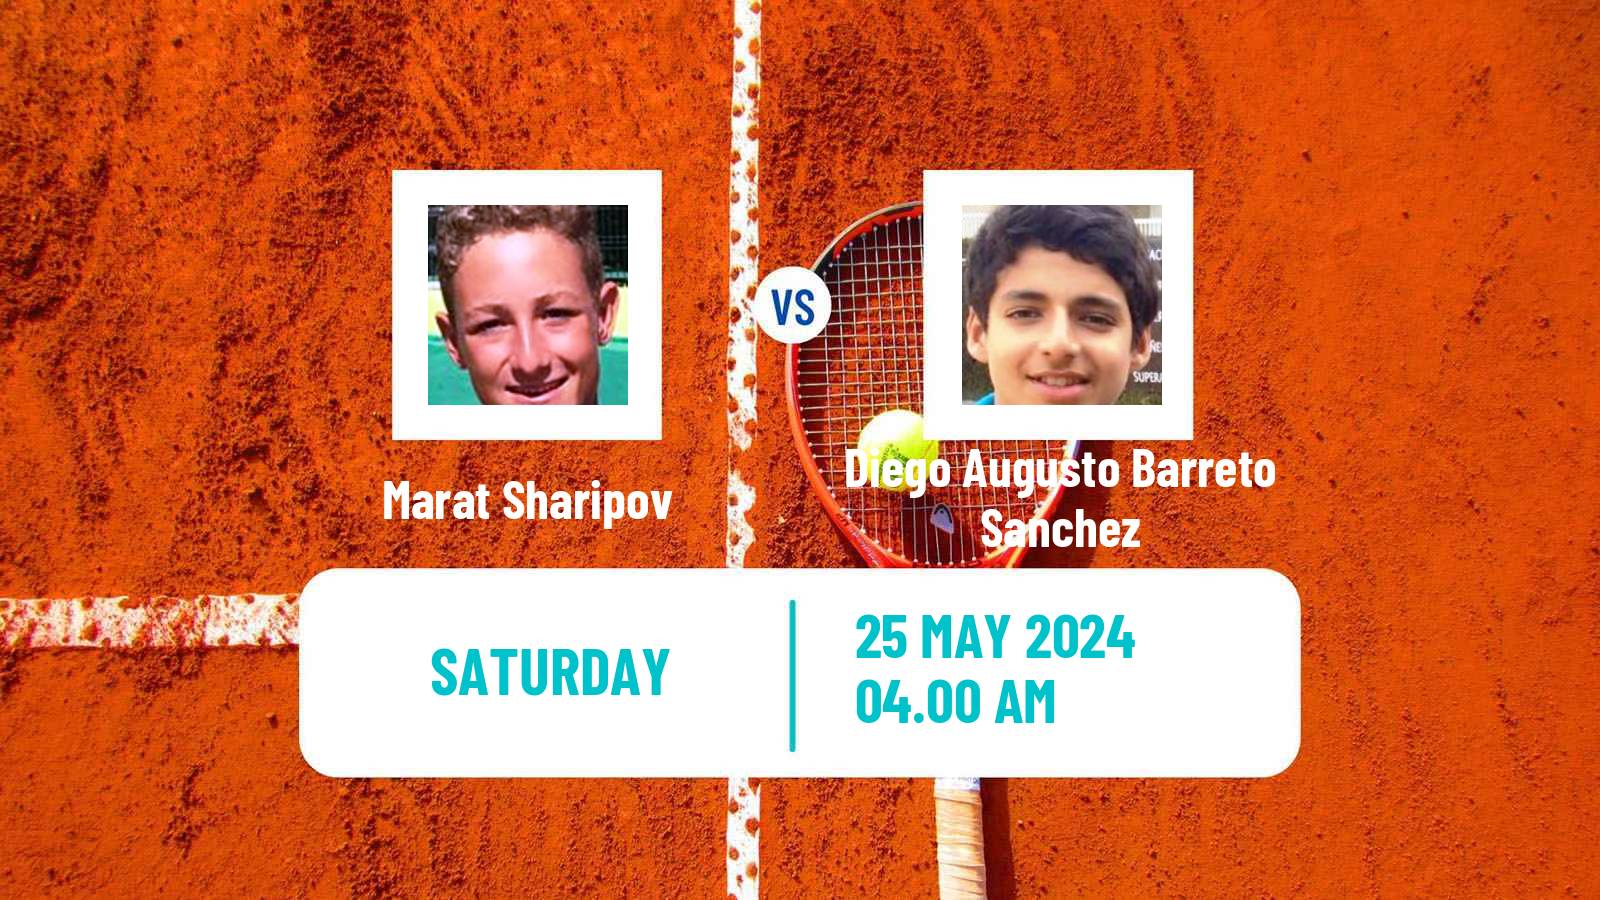 Tennis ITF M15 Kursumlijska Banja 5 Men Marat Sharipov - Diego Augusto Barreto Sanchez